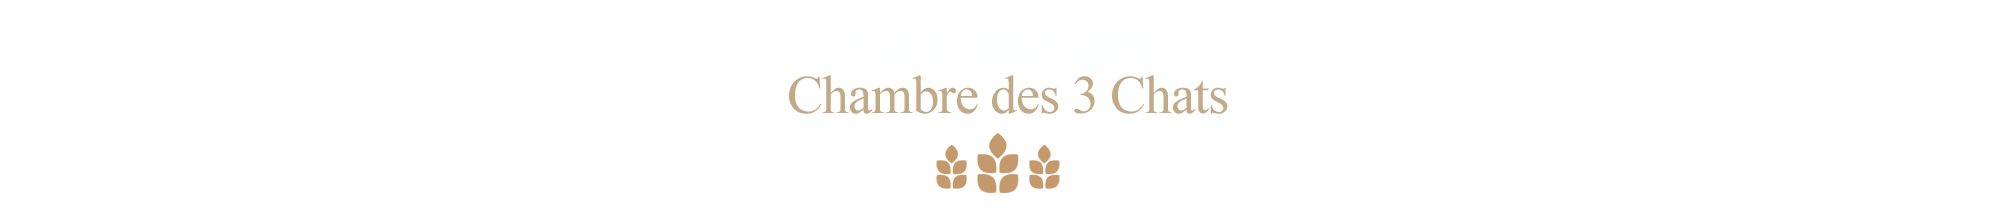 Chambre-des-3-chats-la-Castellane